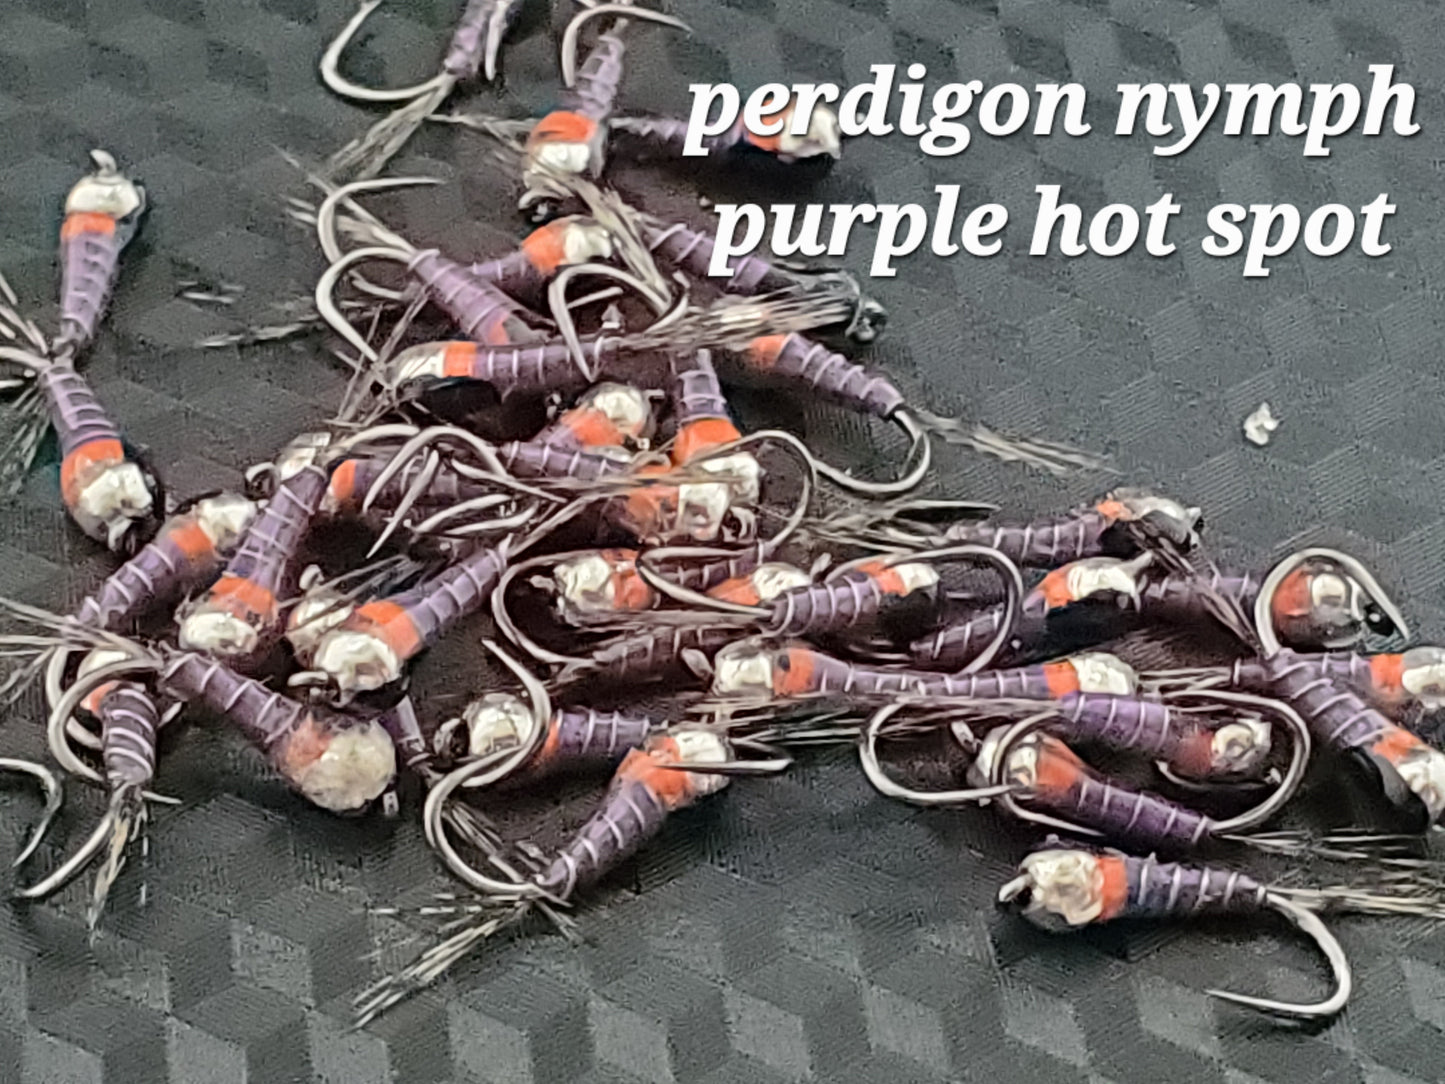 Tungsten Bead Perdigon Nymph, Tungsten Perdigon Nymph, Perdigon Nymph Purple Hot Spot